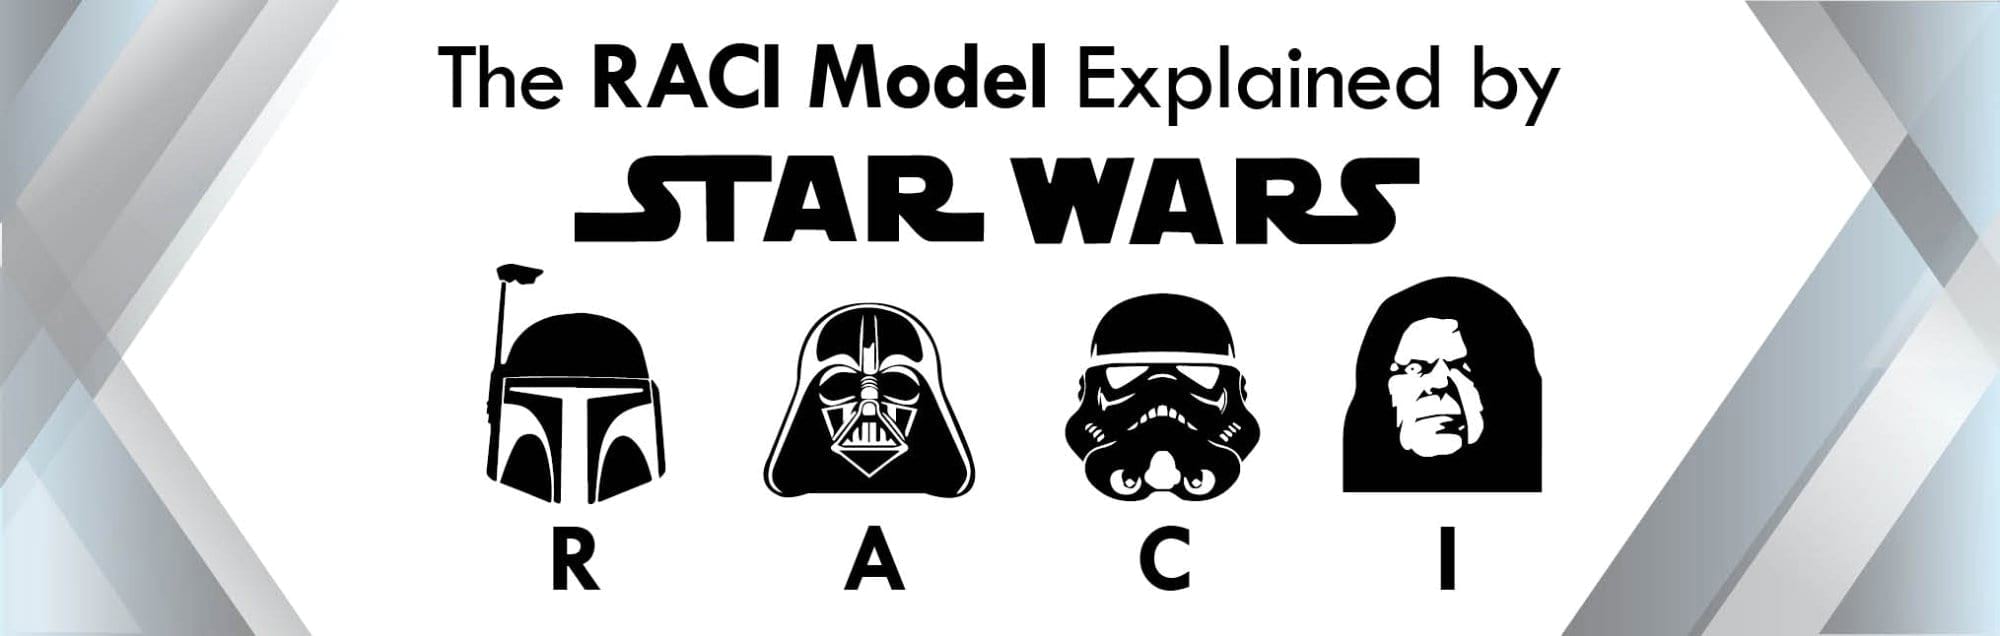 RACI Model by Star Wars